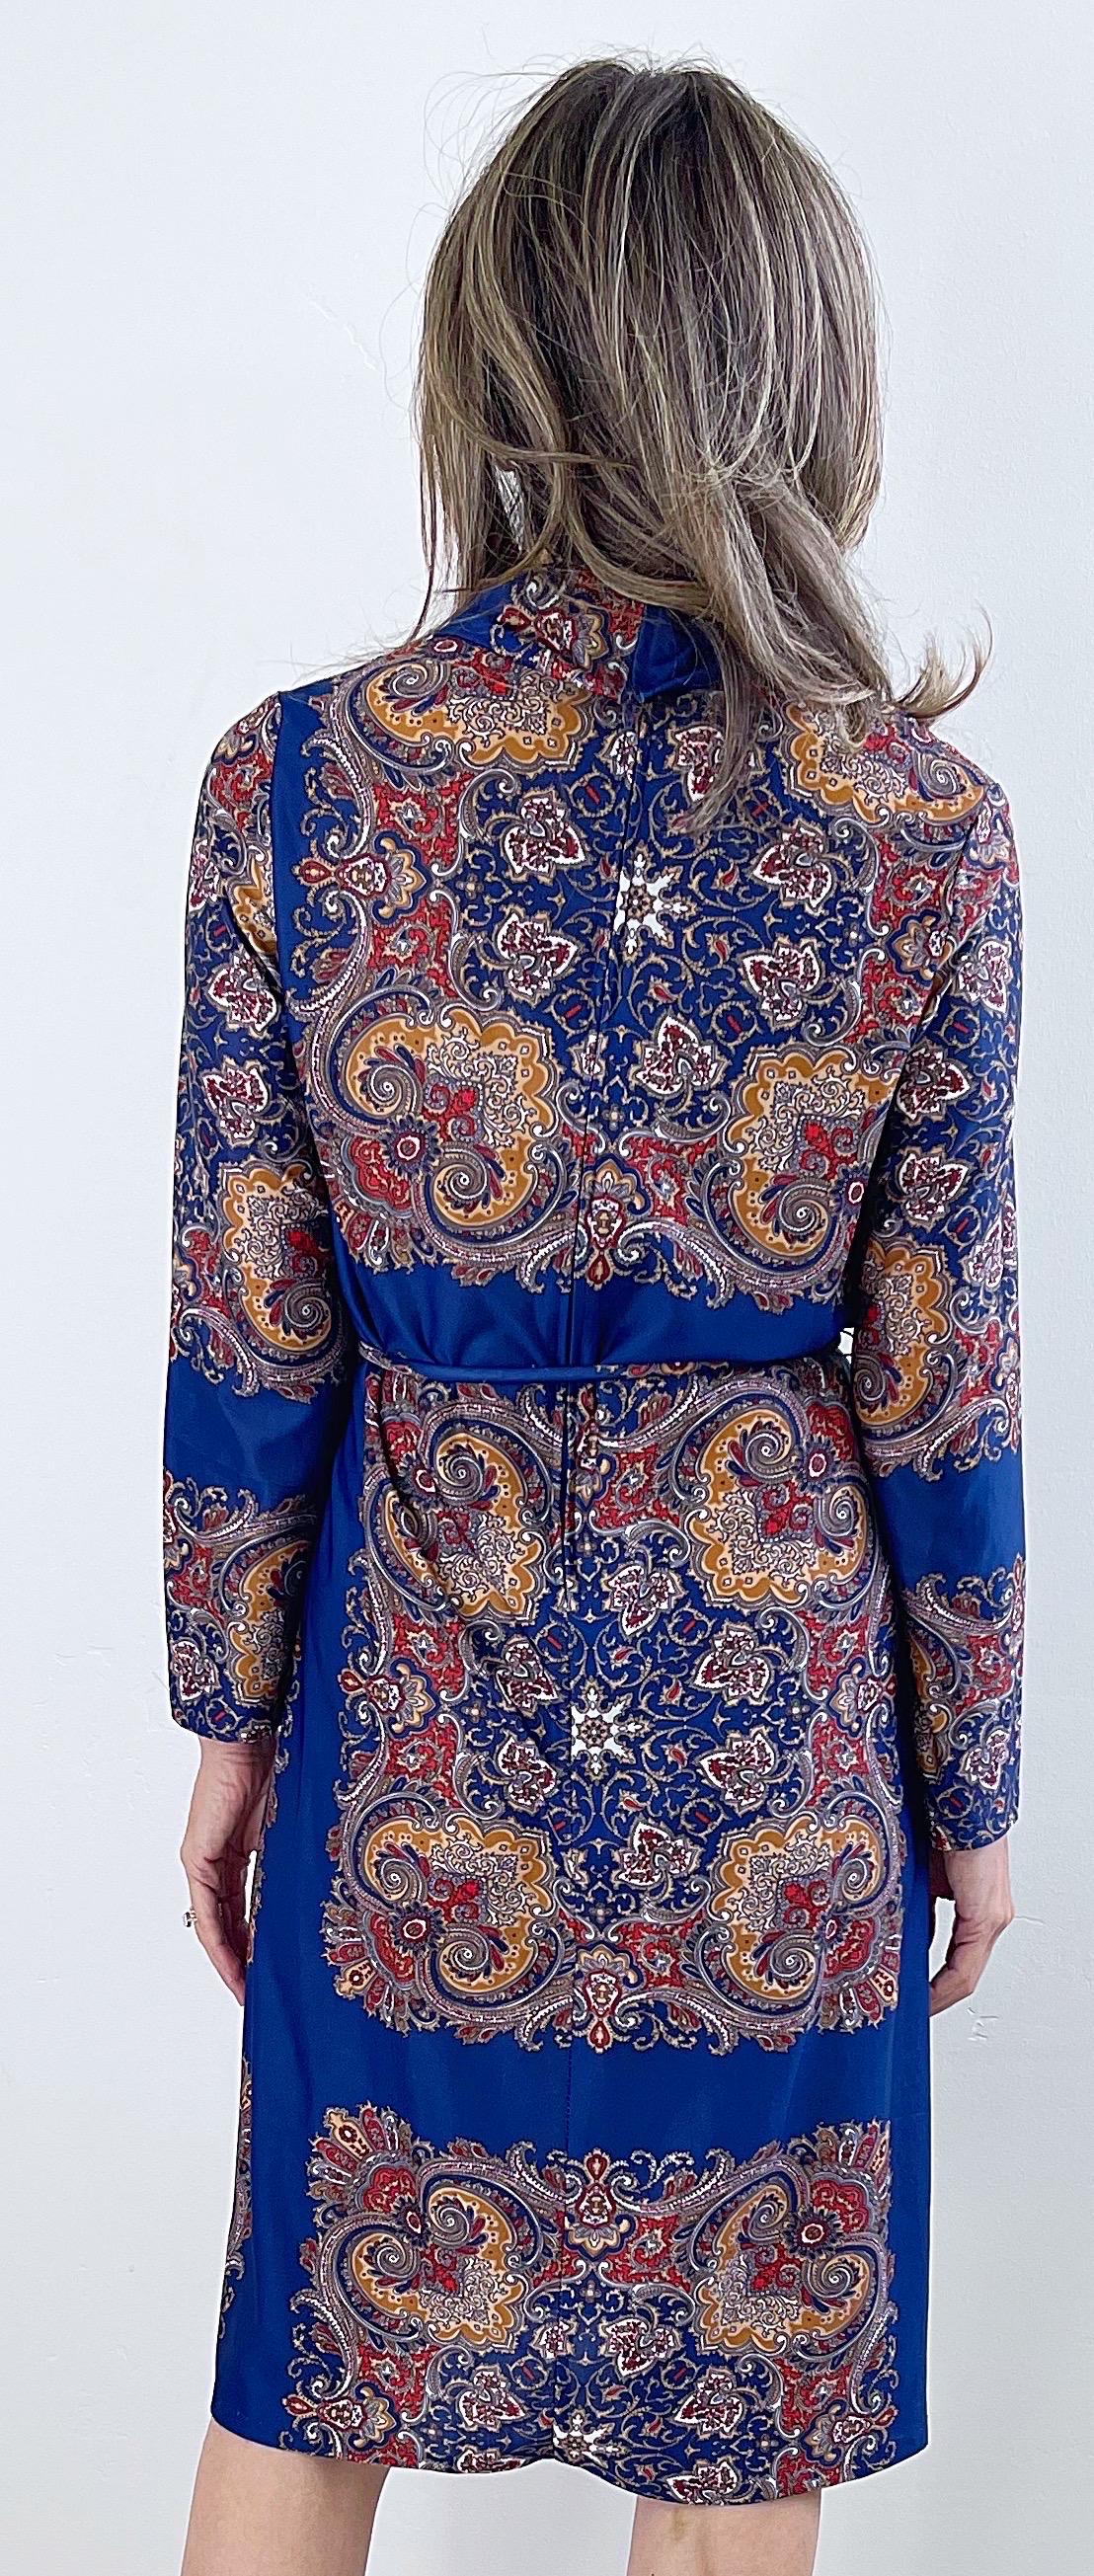 Gray 1970s Boho Chic Paisley Print Long Sleeve Mock Neck Vintage 70s Knit Dress For Sale